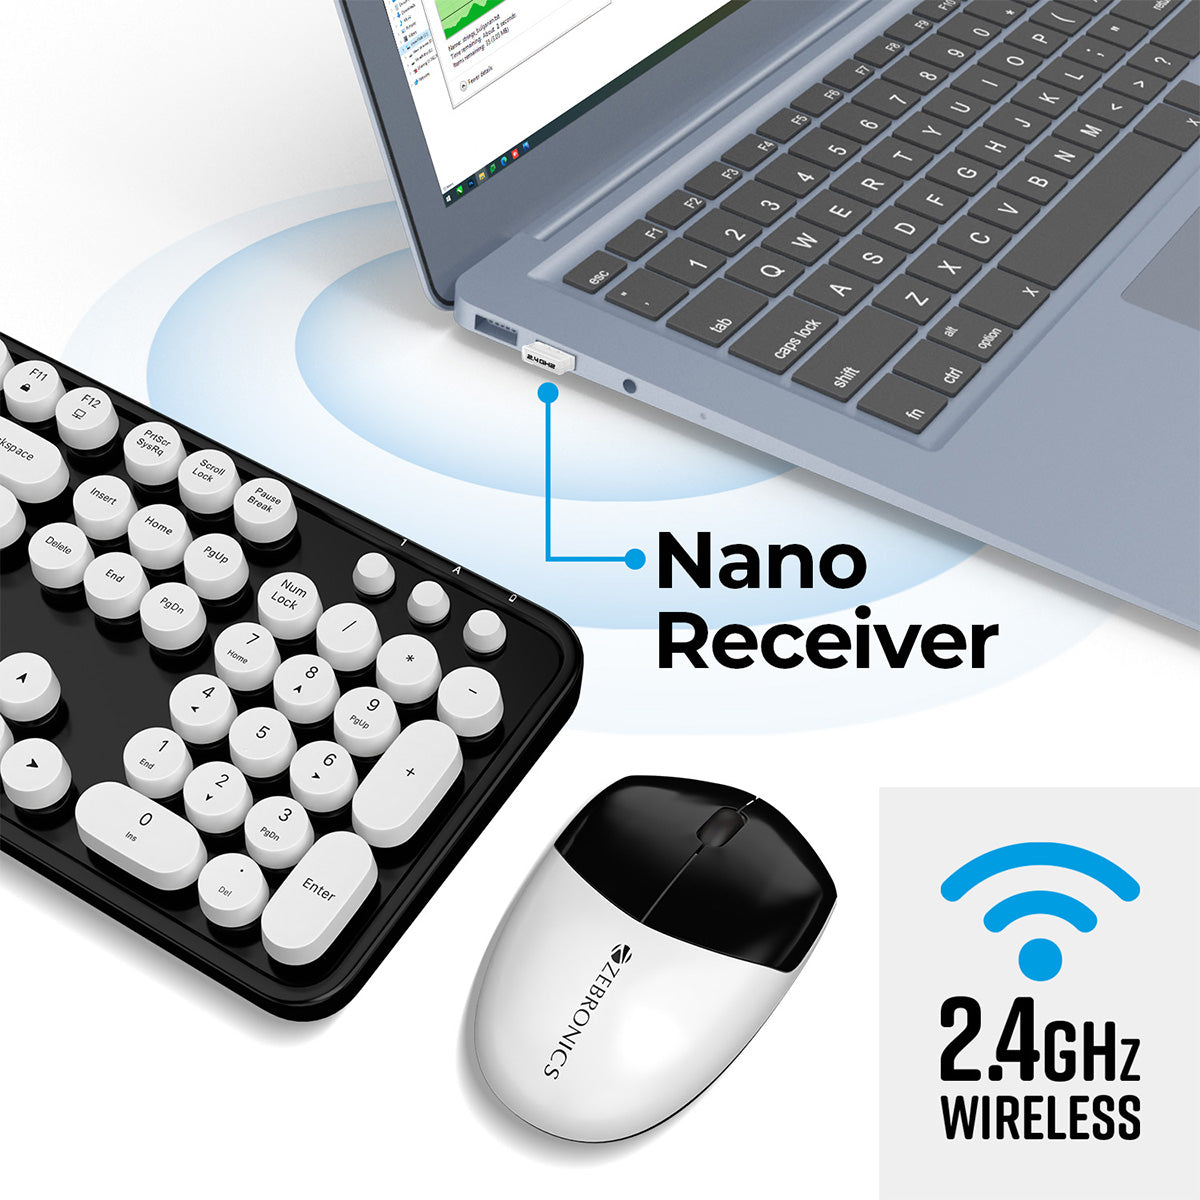 Zeb-Companion 300 - Wireless Keyboard and Mouse Combo - Zebronics